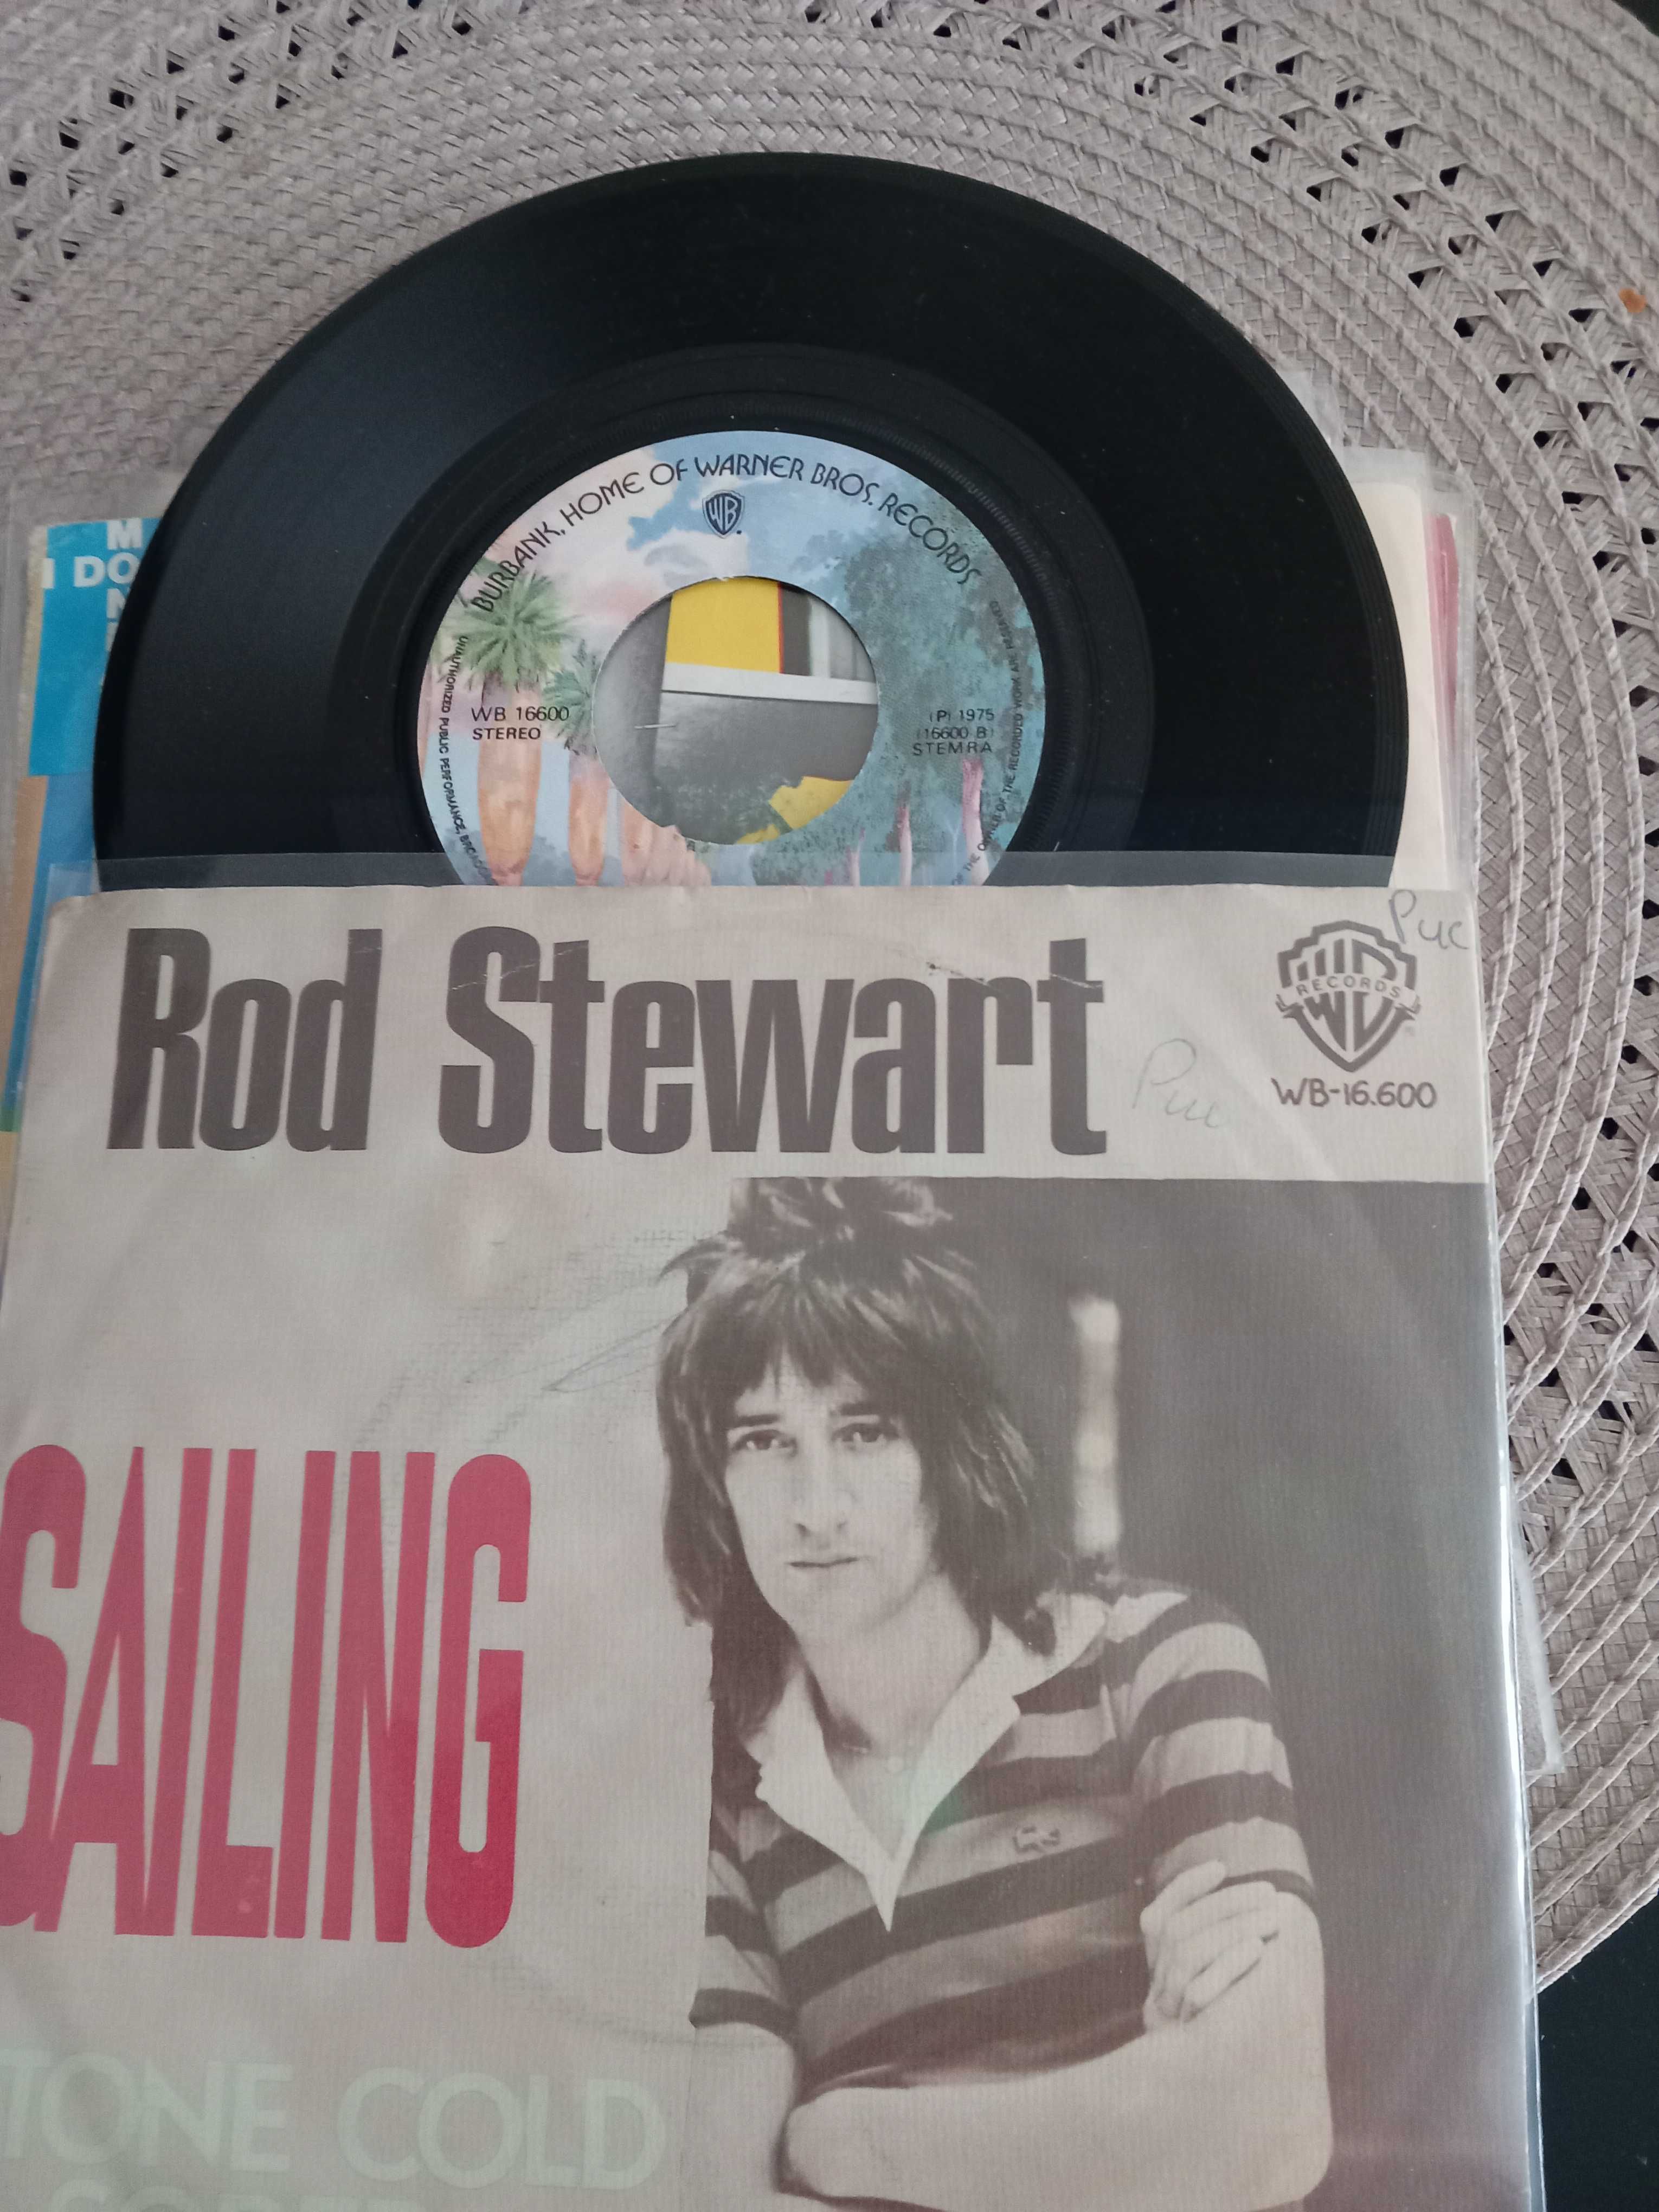 Rod Stewart - sailing - singiel